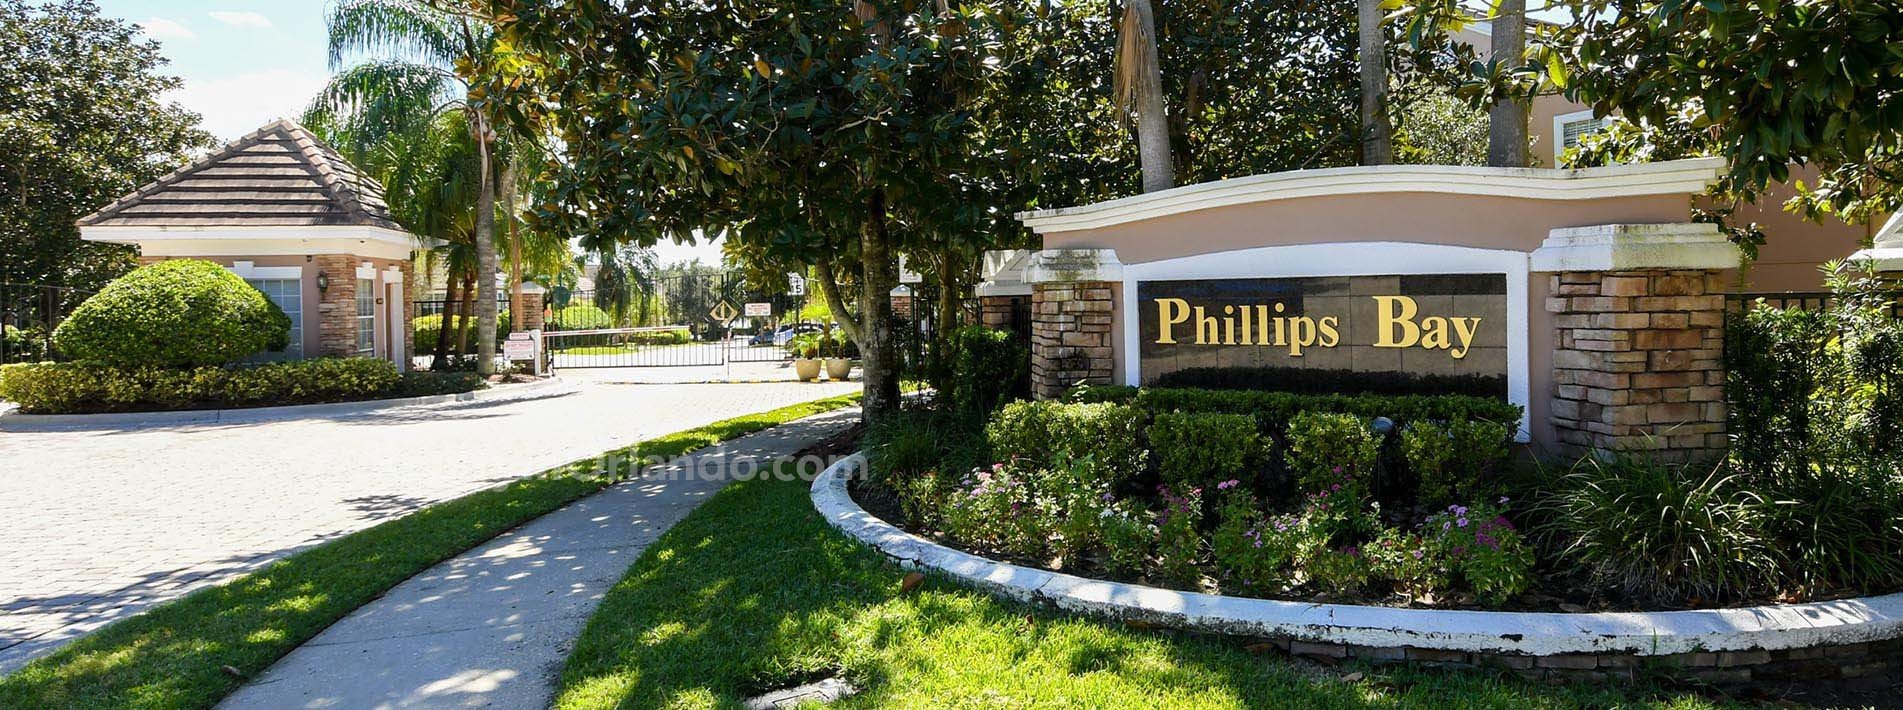 Phillips Bay Orlando